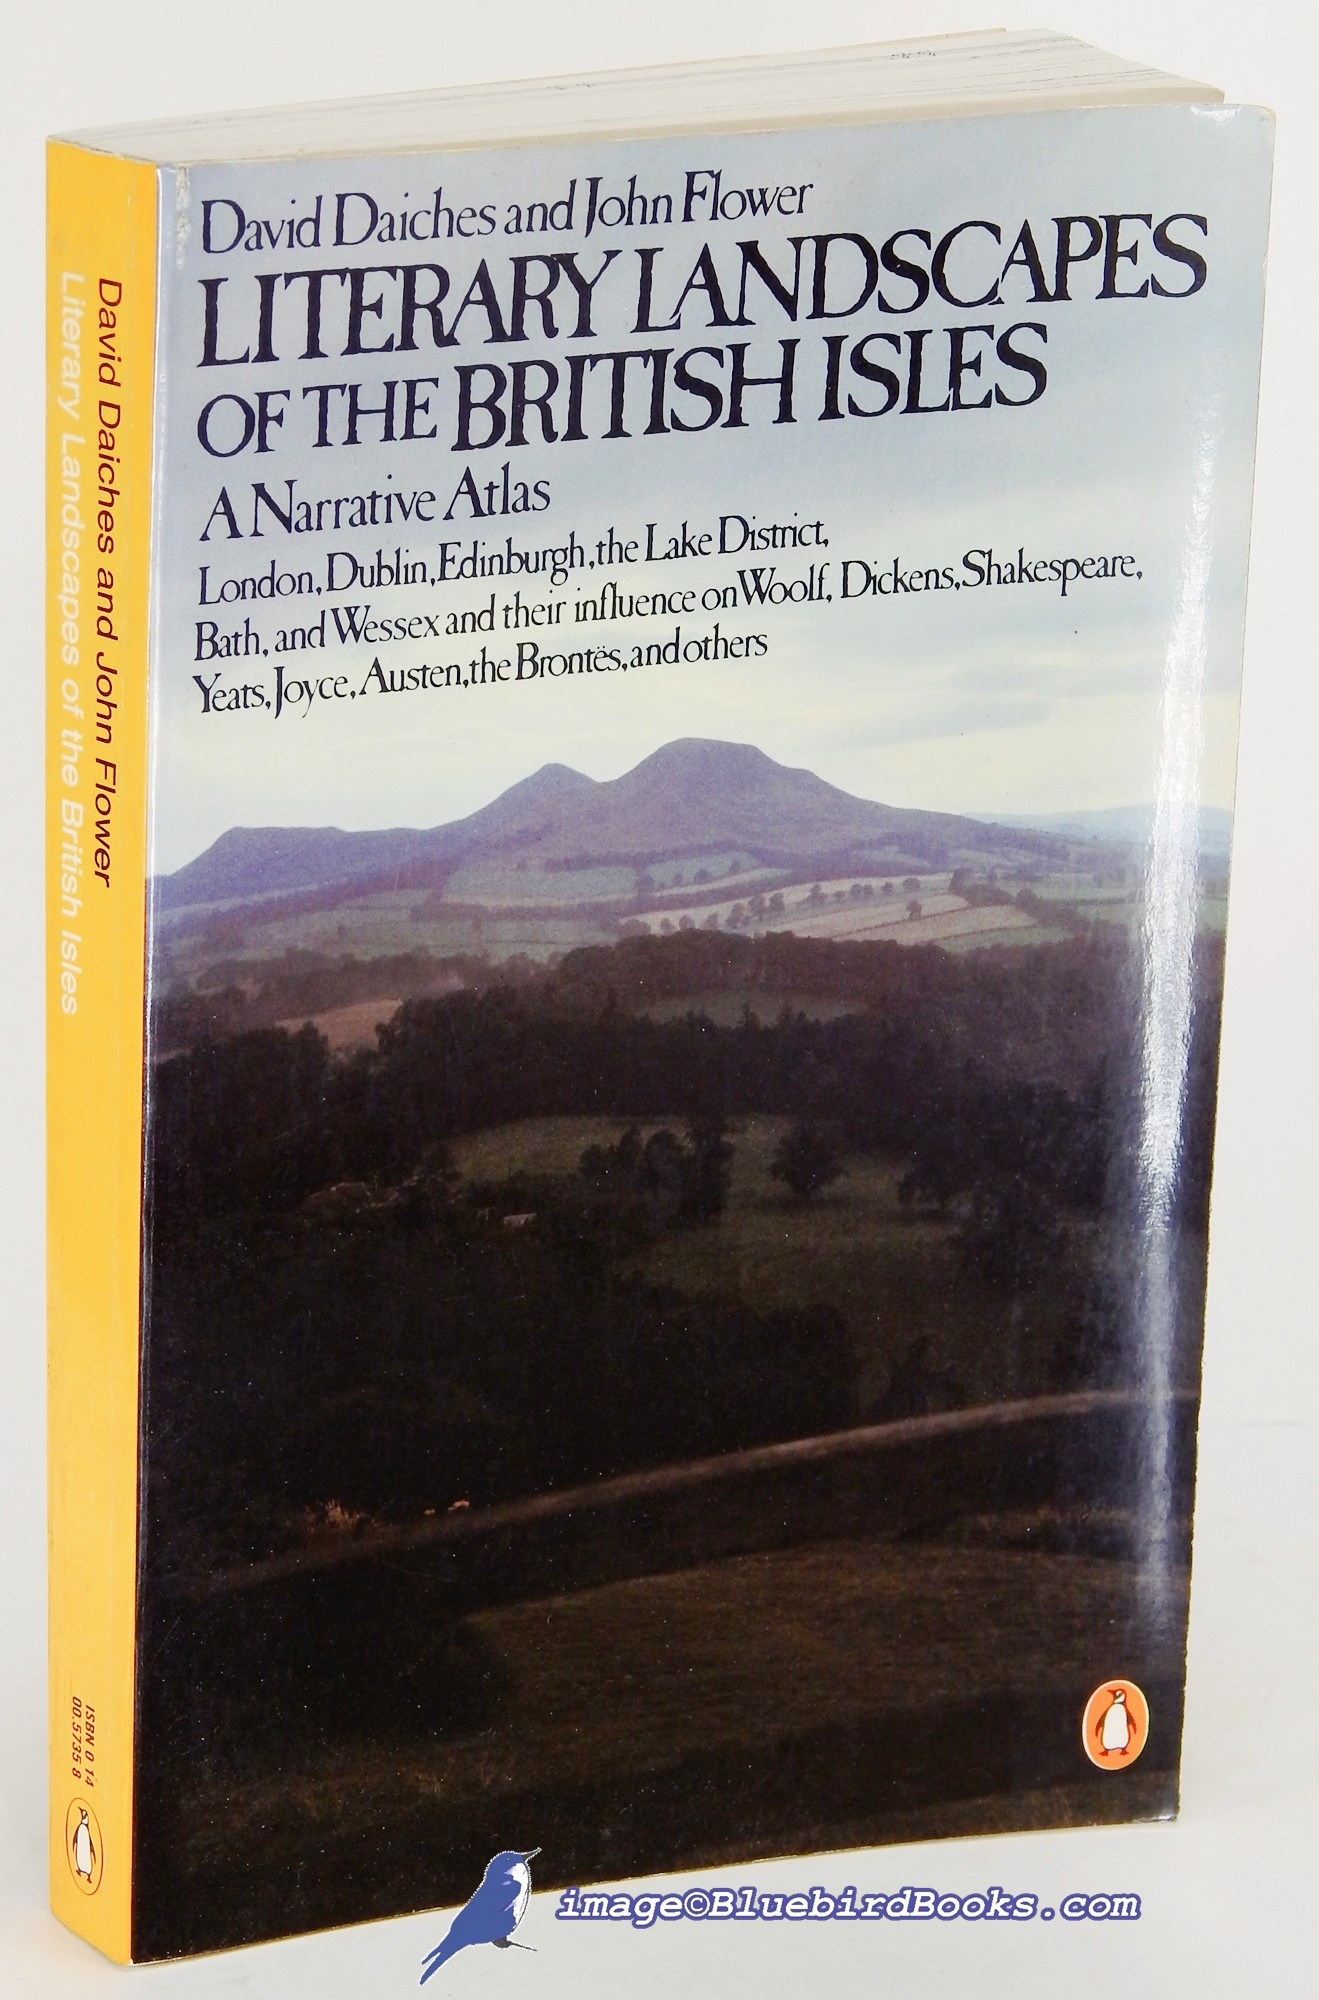 DAICHES, DAVID; FLOWER, JOHN - Literary Landscapes of the British Isles: A Narrative Atlas